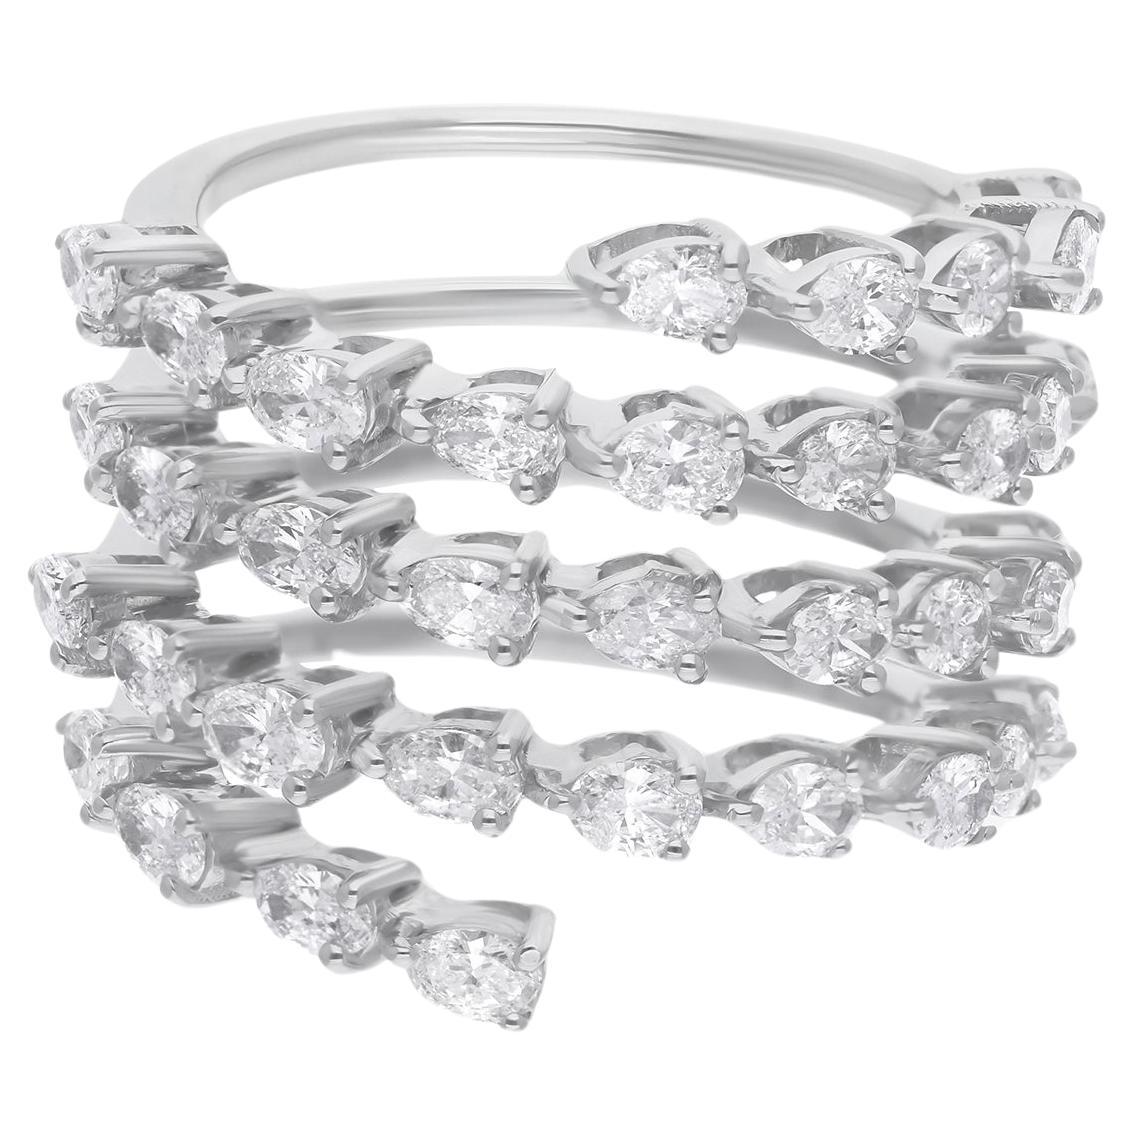 2.08 Carat Oval Shape Diamond Spiral Ring 18 Karat White Gold Handmade Jewelry For Sale